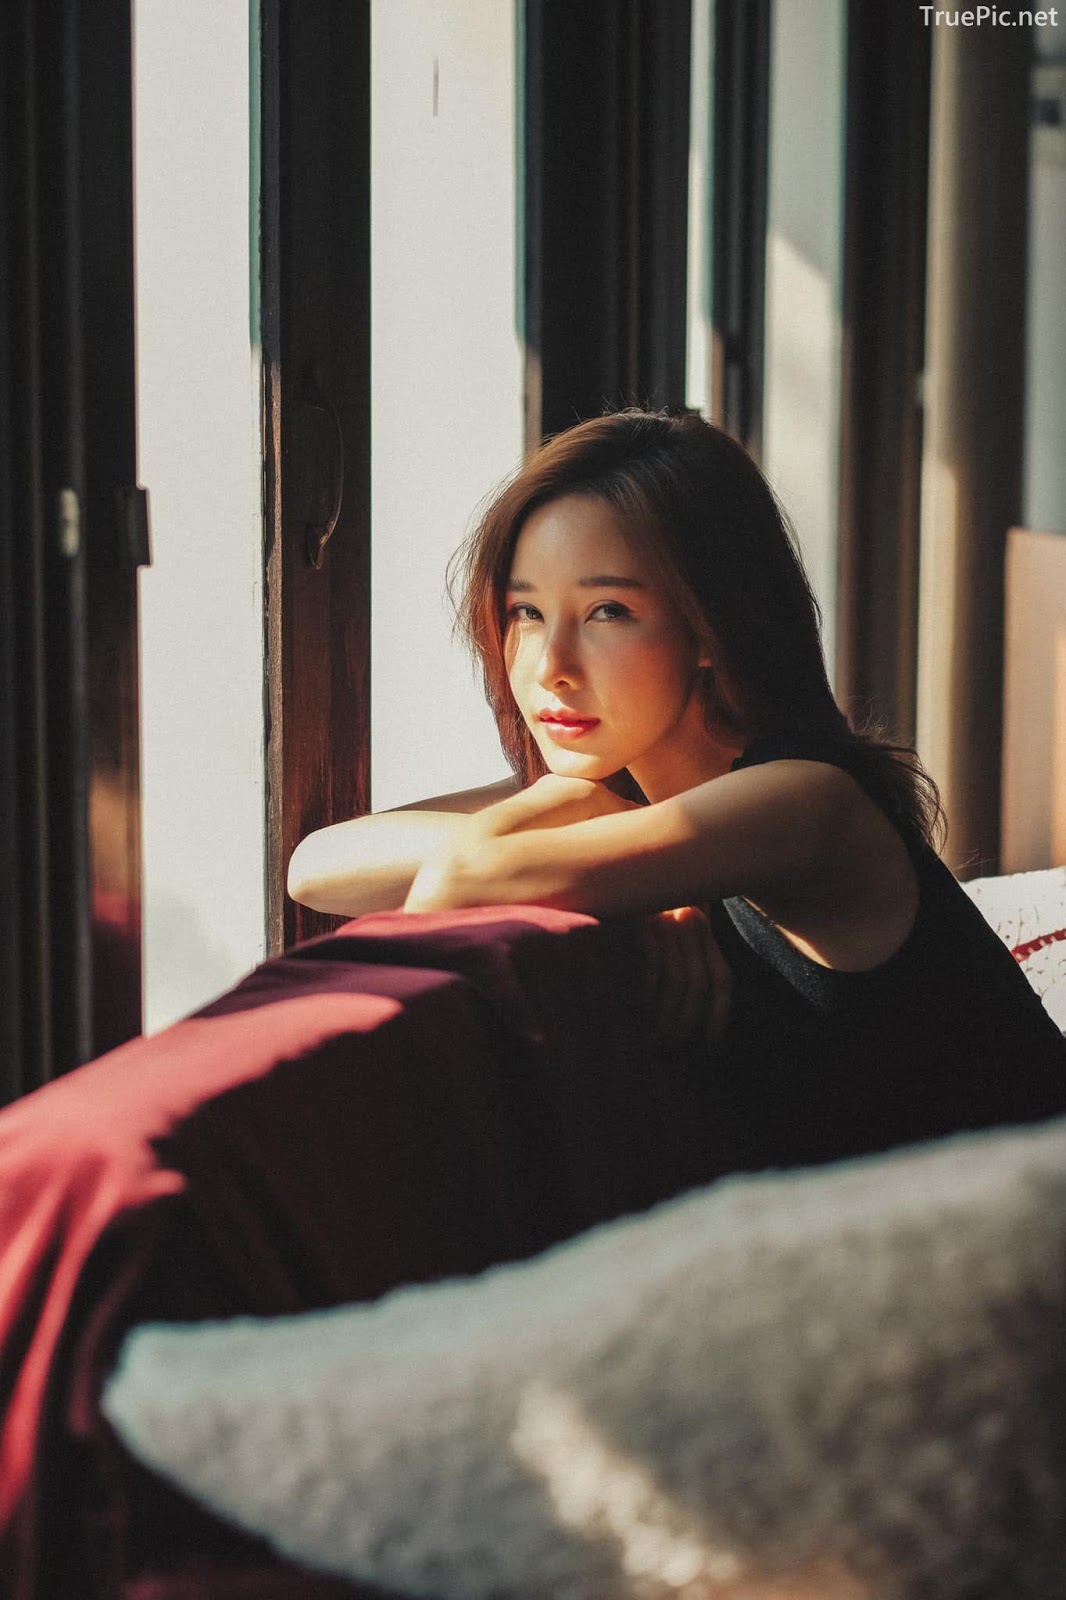 Thailand model - Arys Nam-in (Arysiacara) - Black Rose feeling the sun - Picture 20